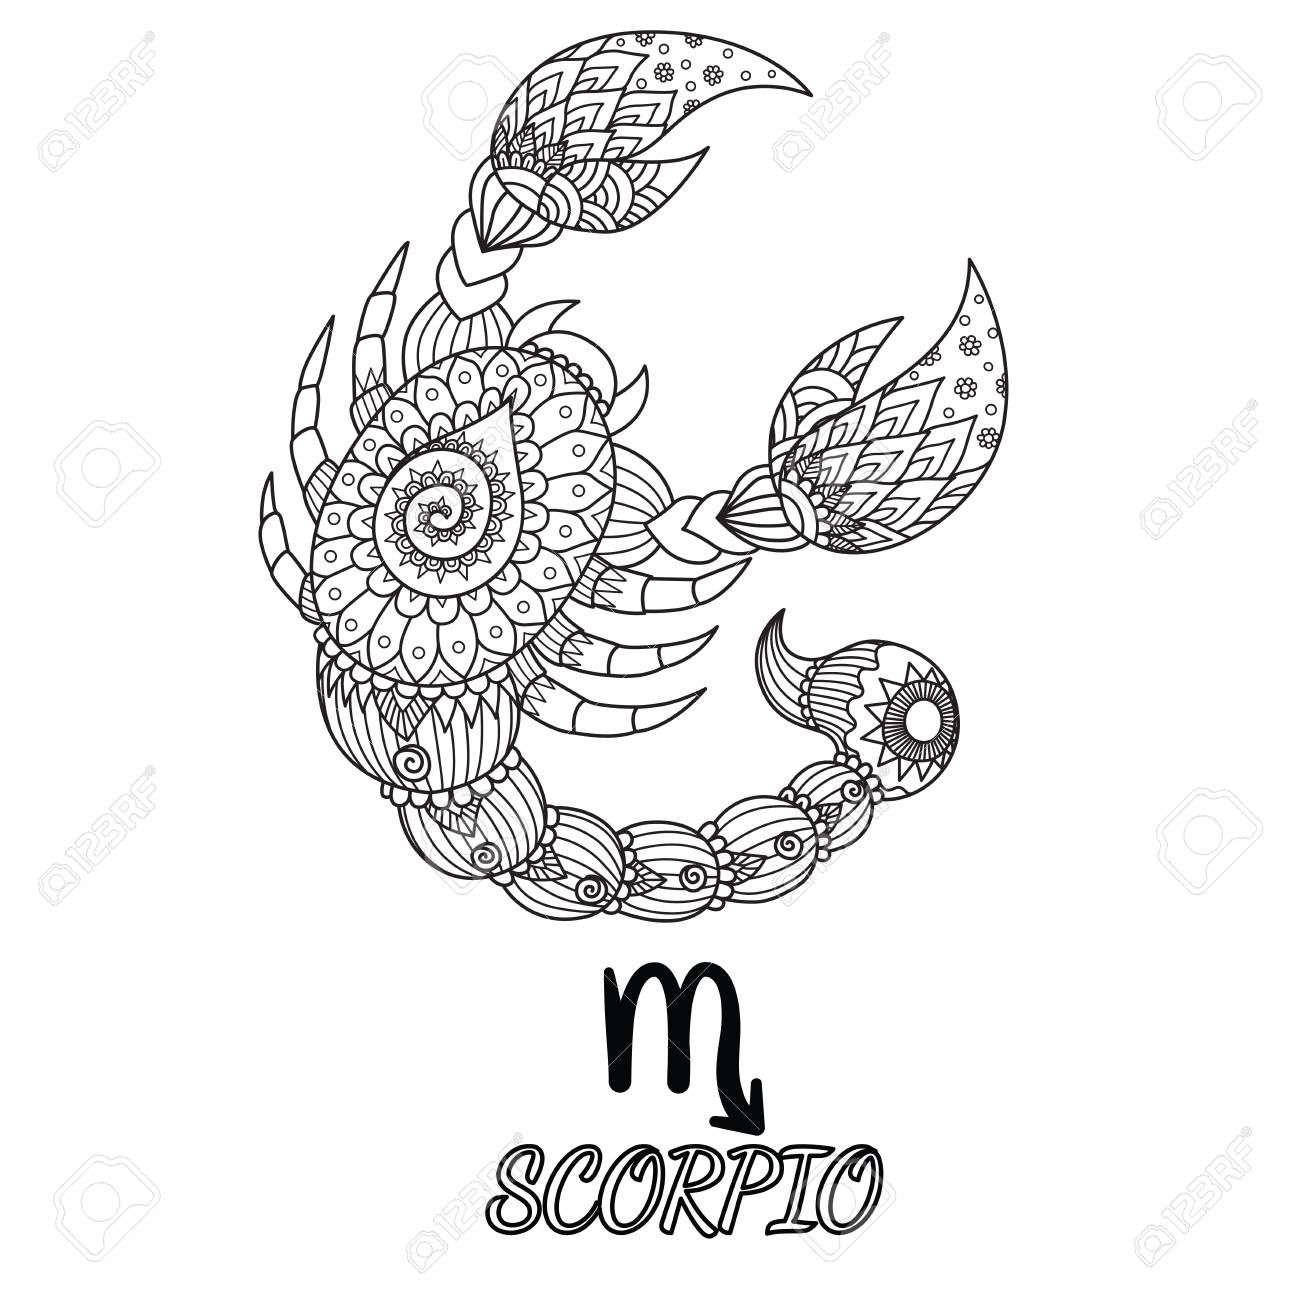 Scorpio Zodiac Horoscope Constellation Sign Symbol Tattoo (74)